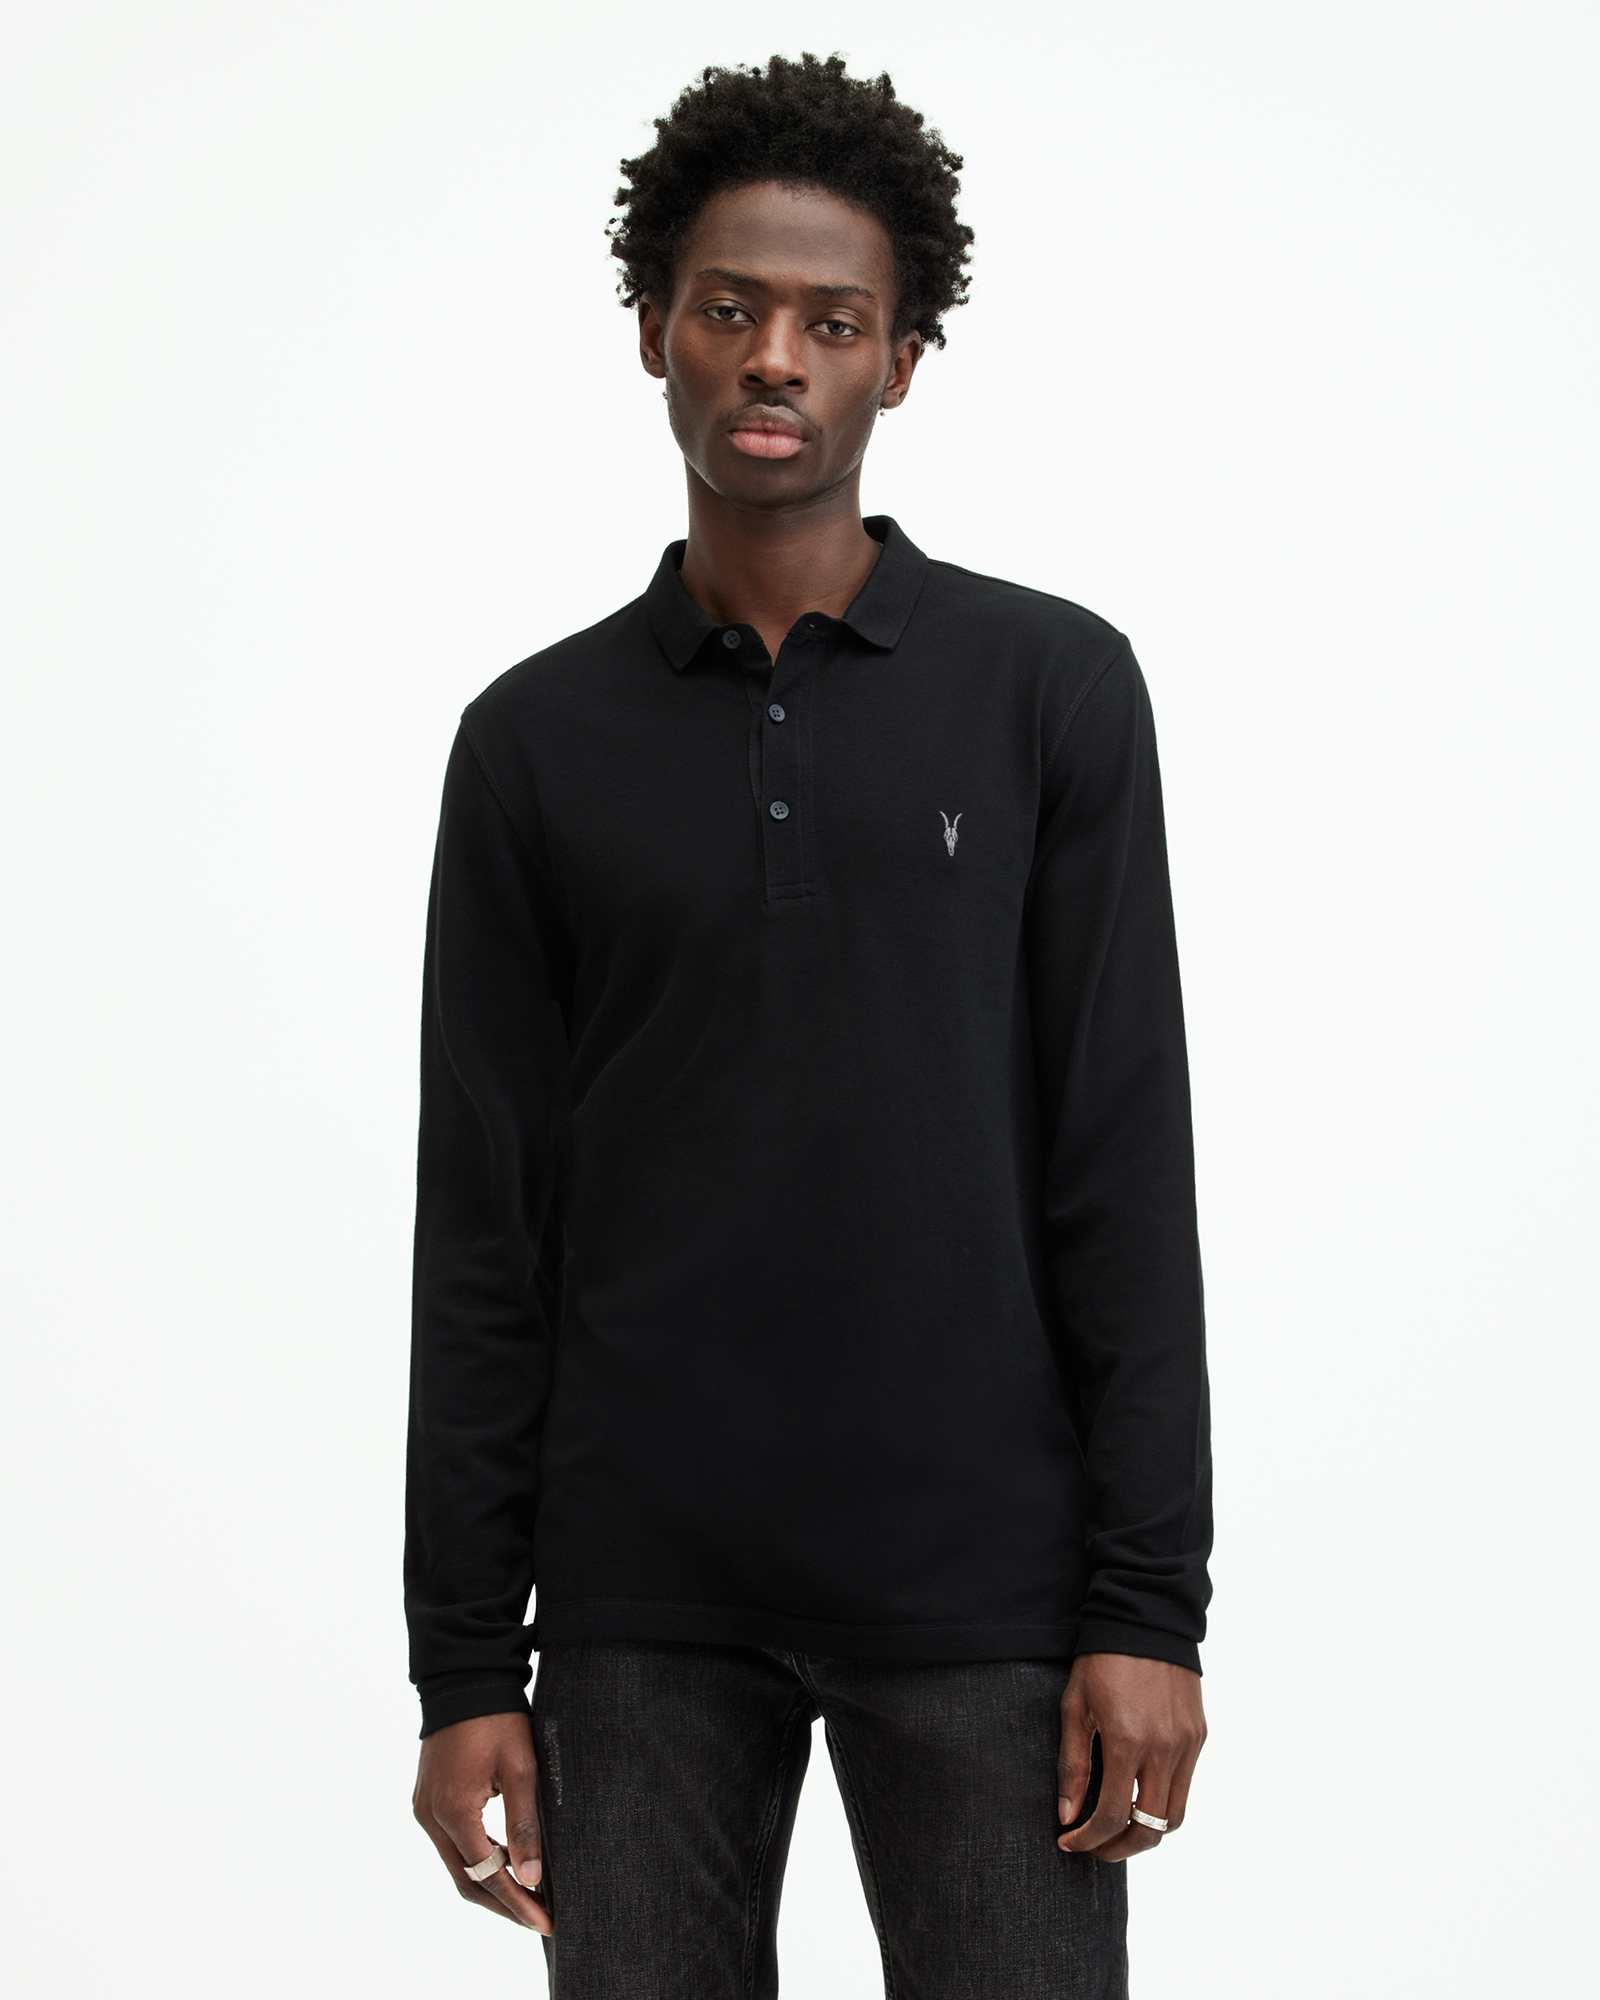 AllSaints Reform Long Sleeve Polo Shirt,, Black